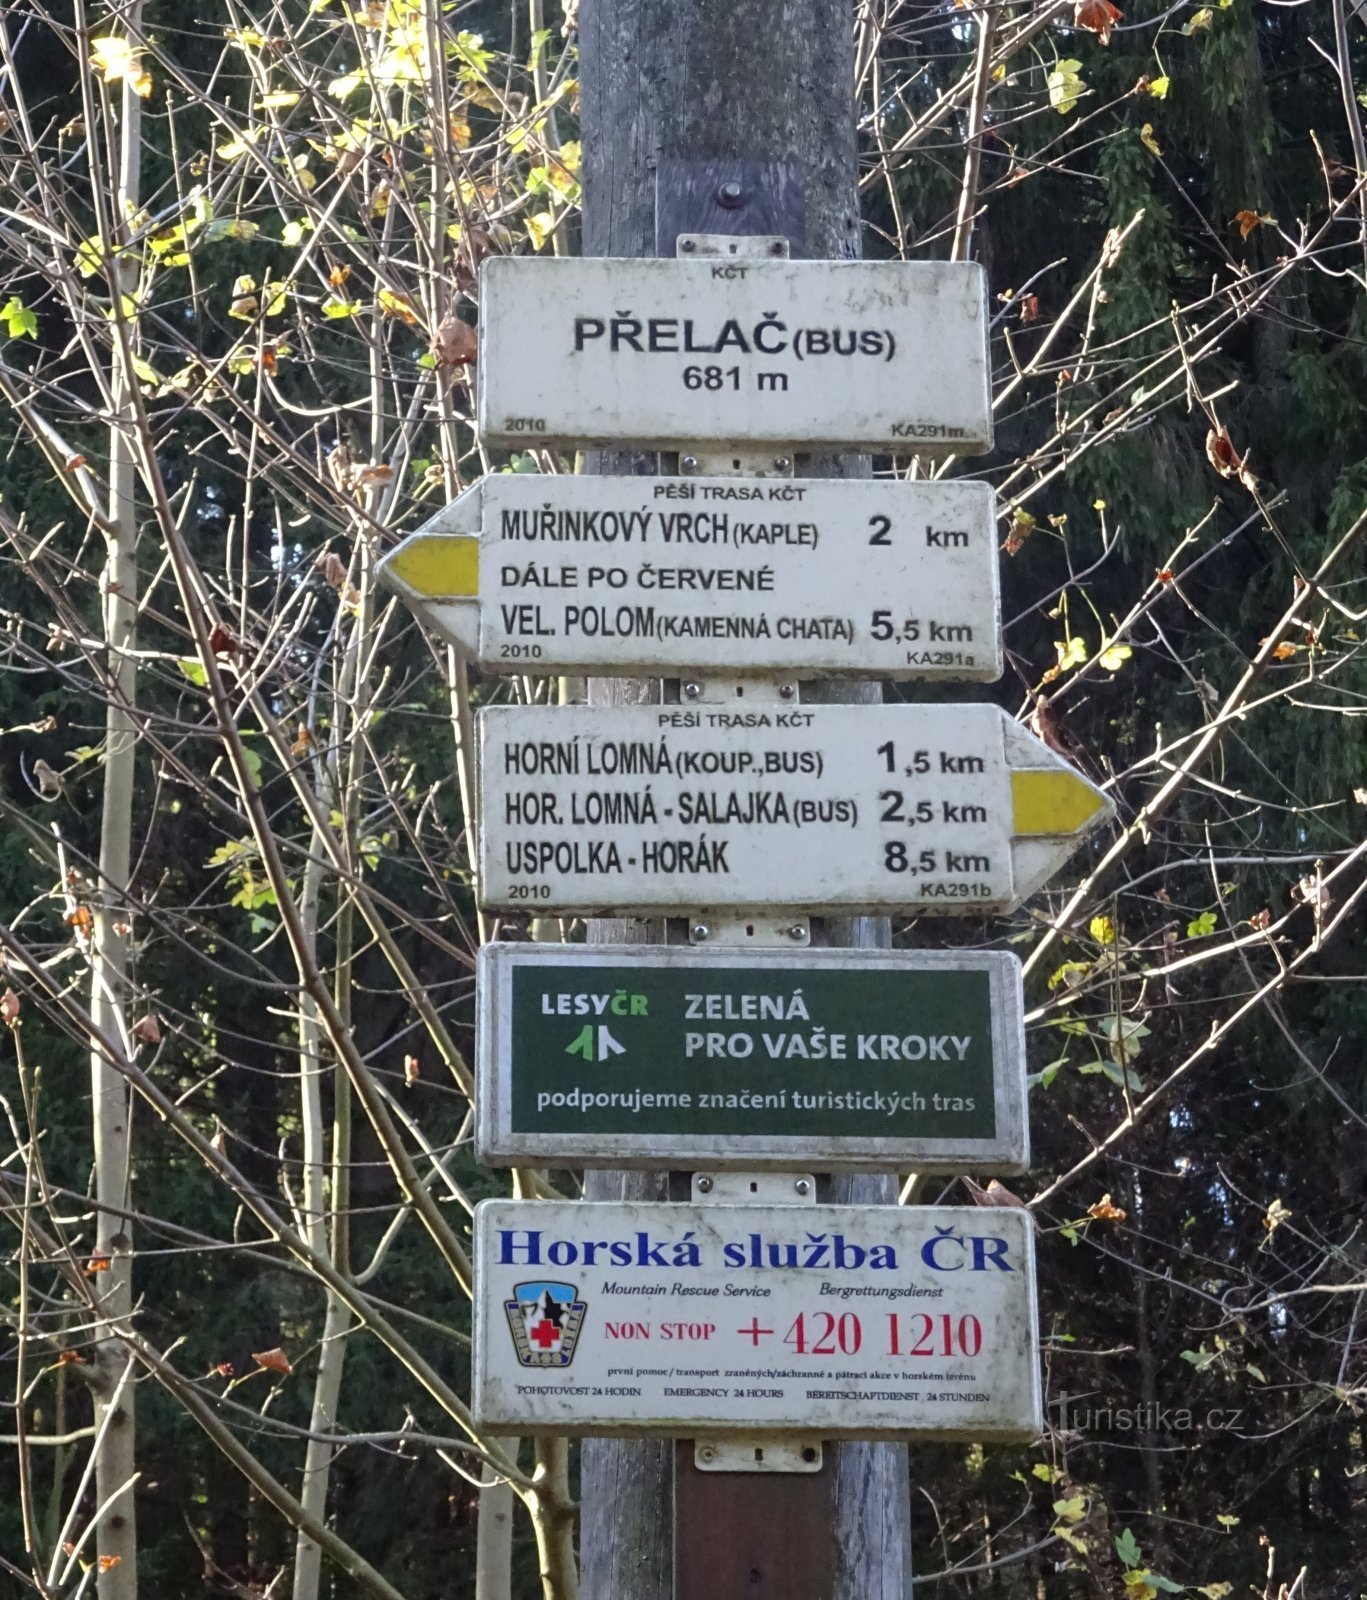 placa de sinalização em Přelač